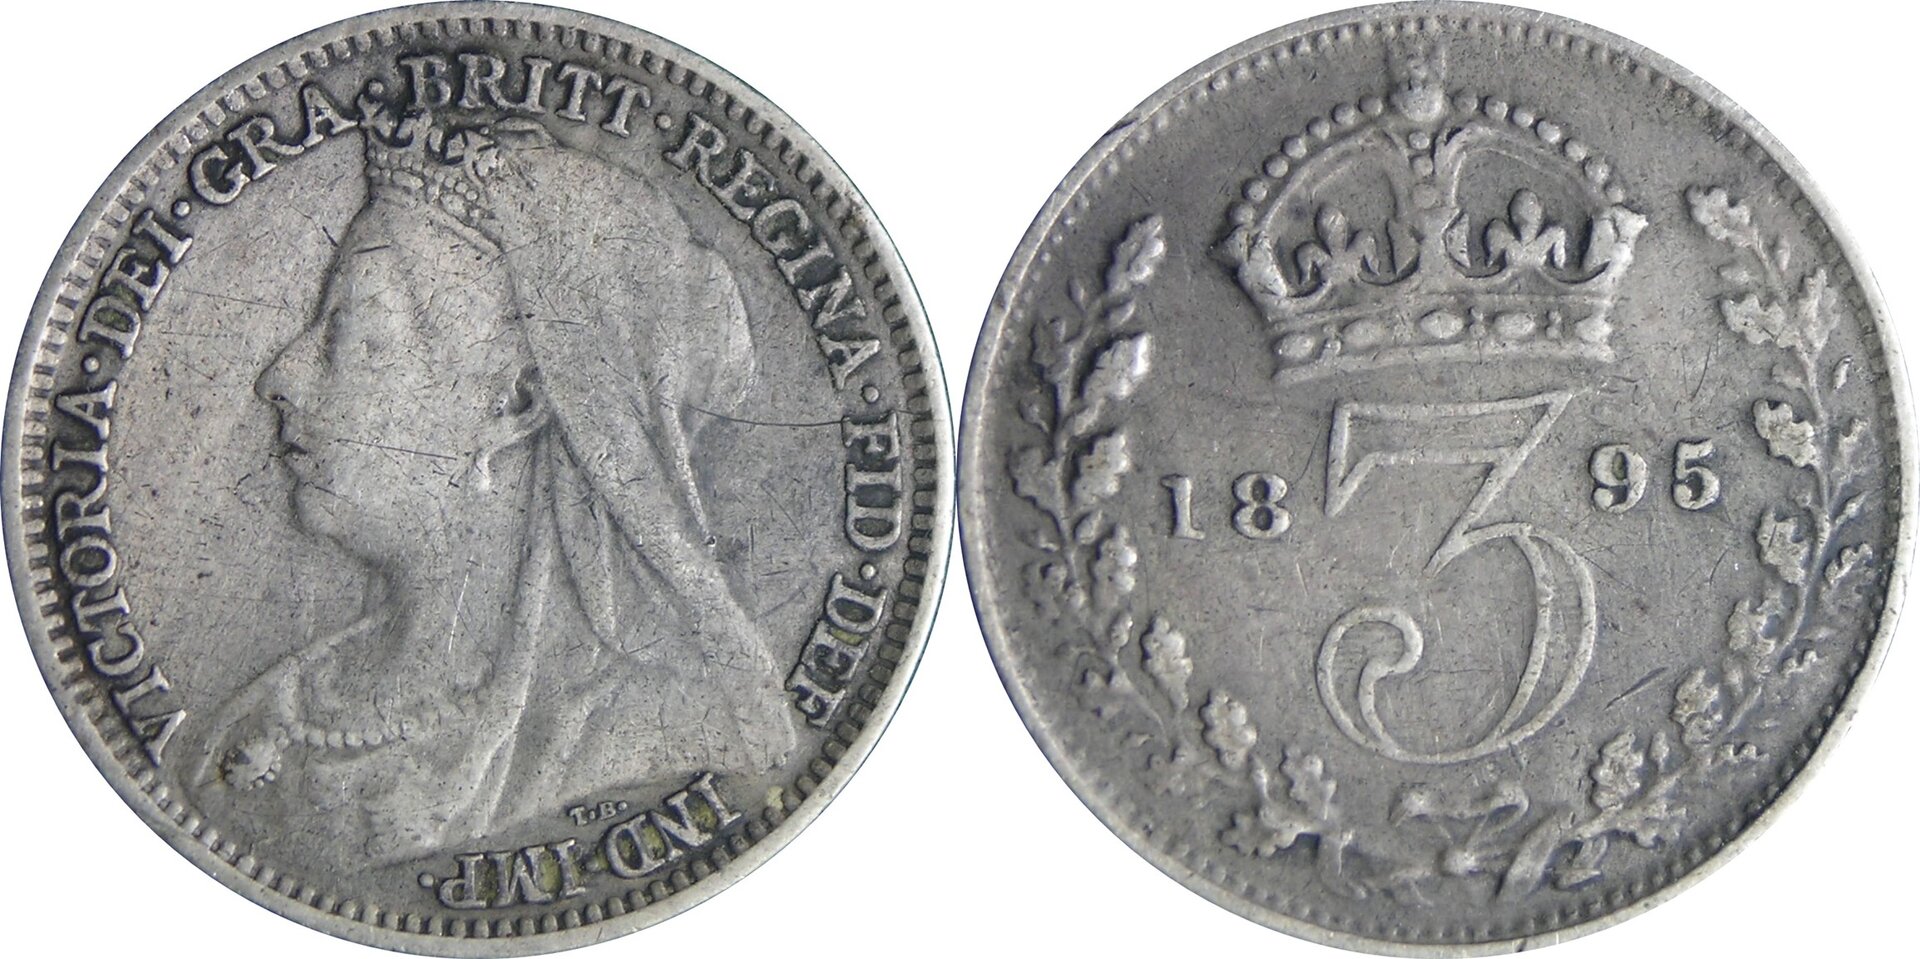 1895 GB 3 p.jpg